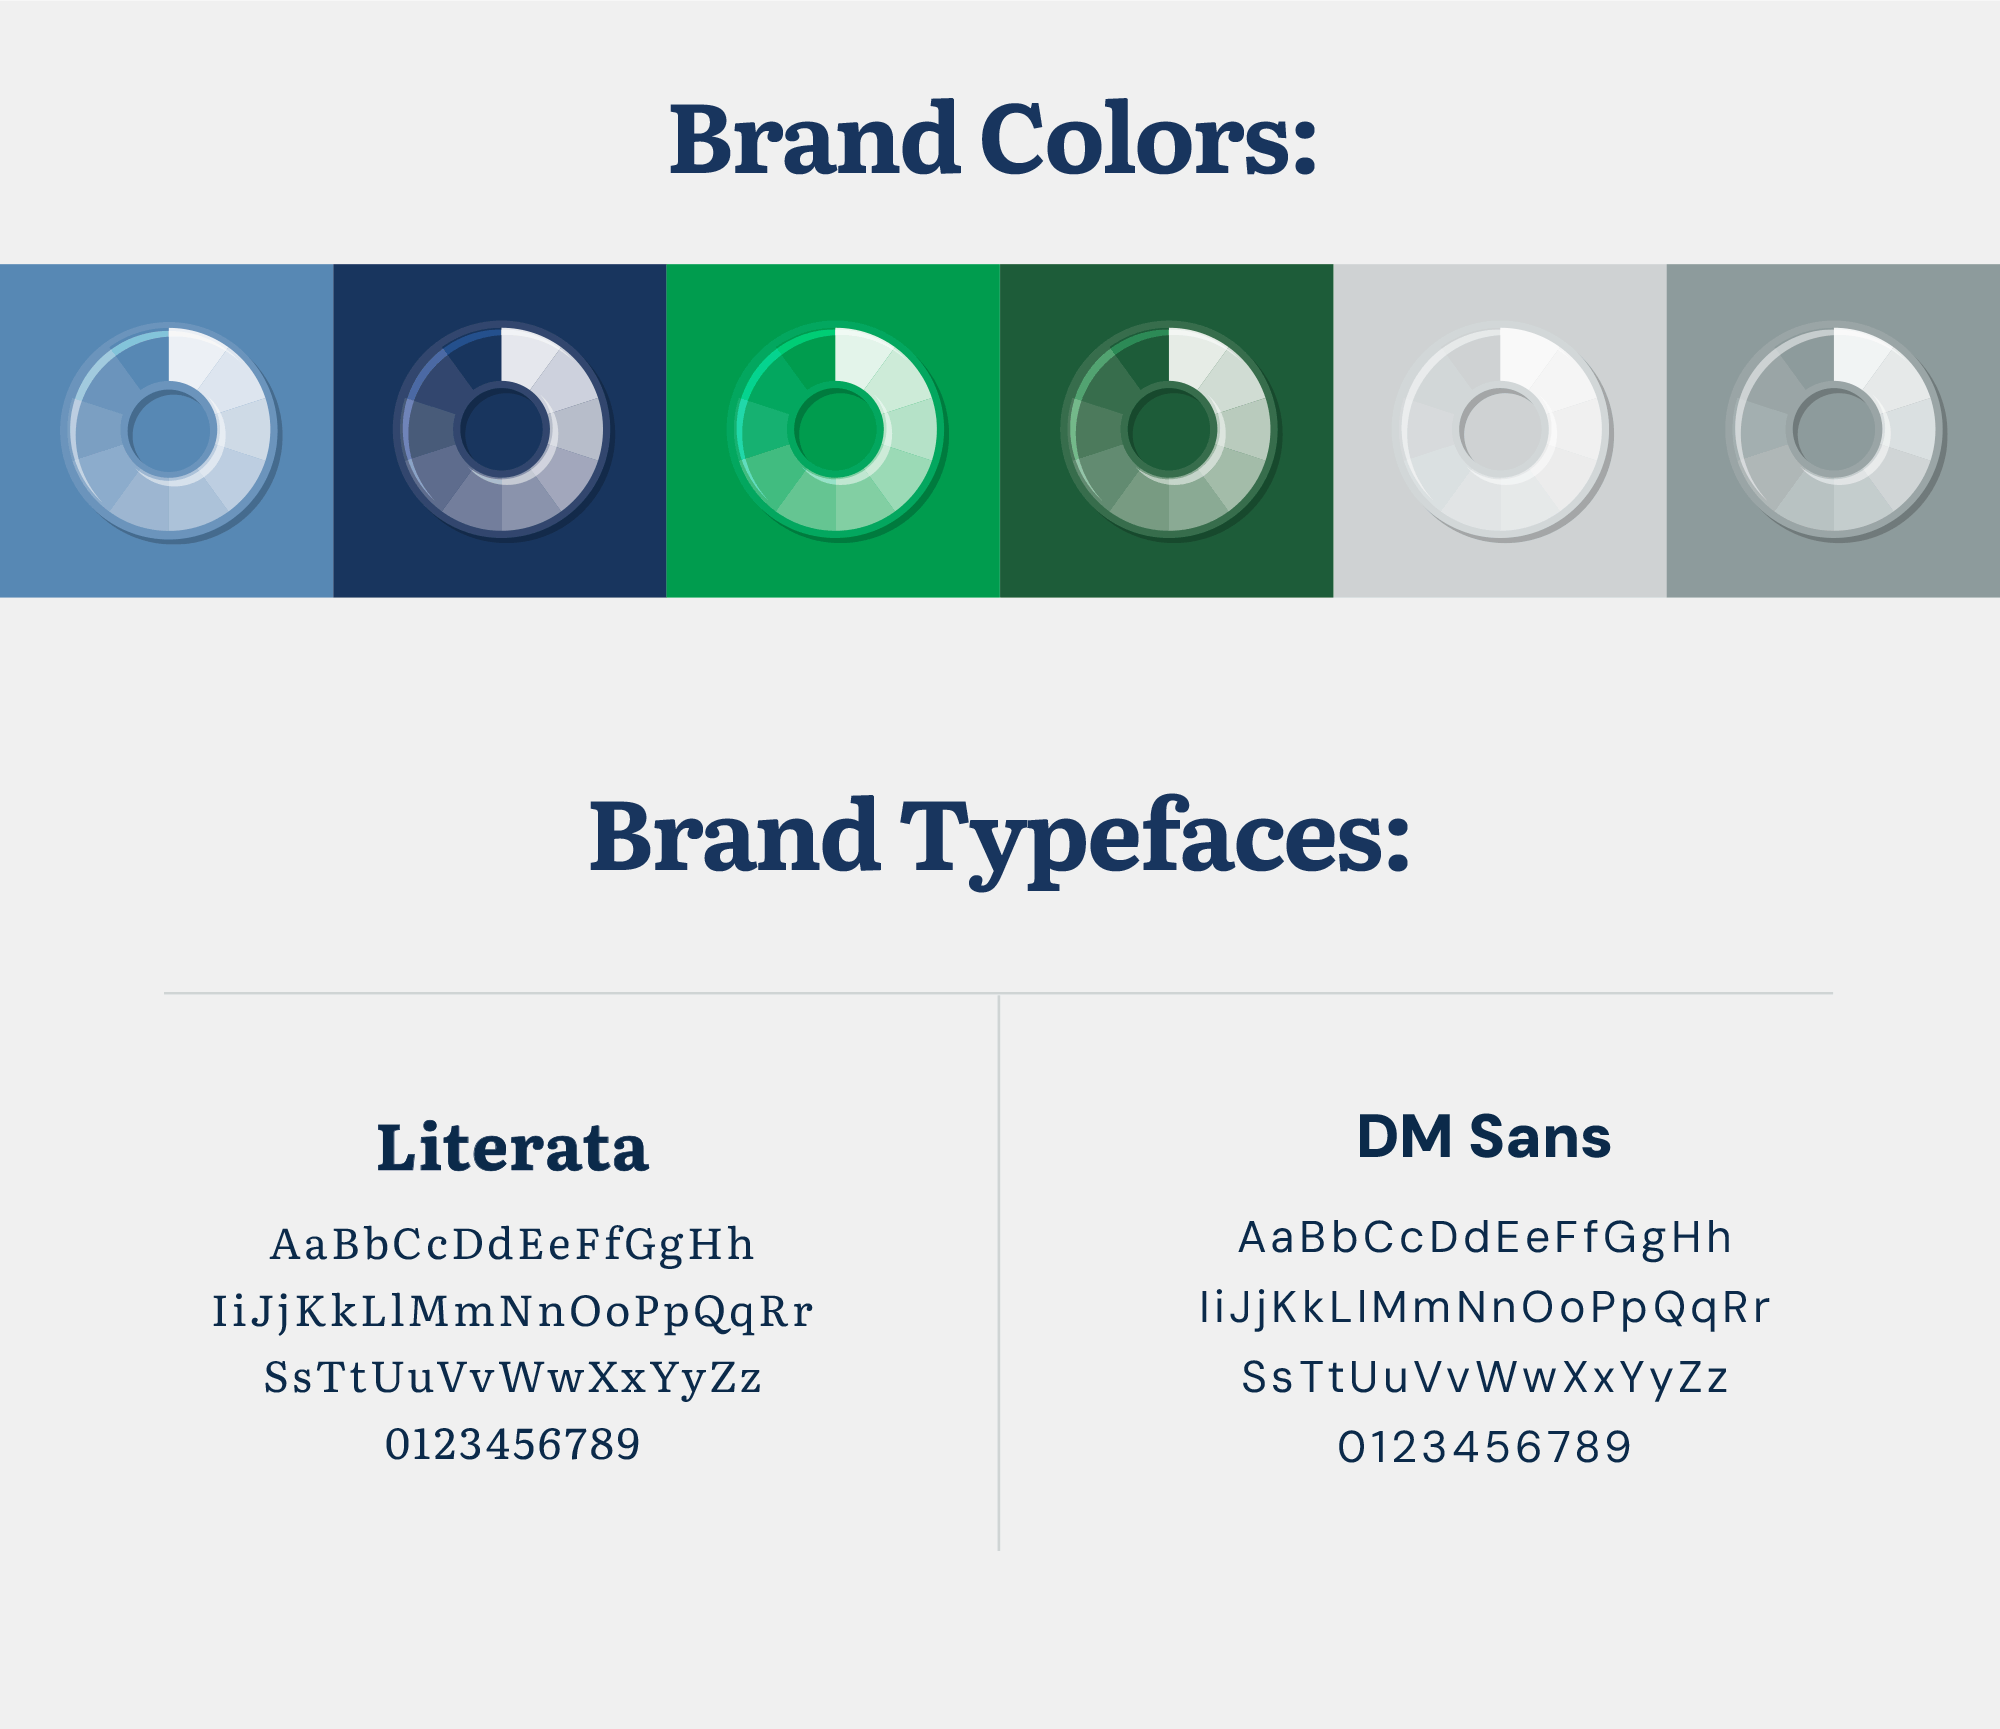 StC brand colors & typefaces